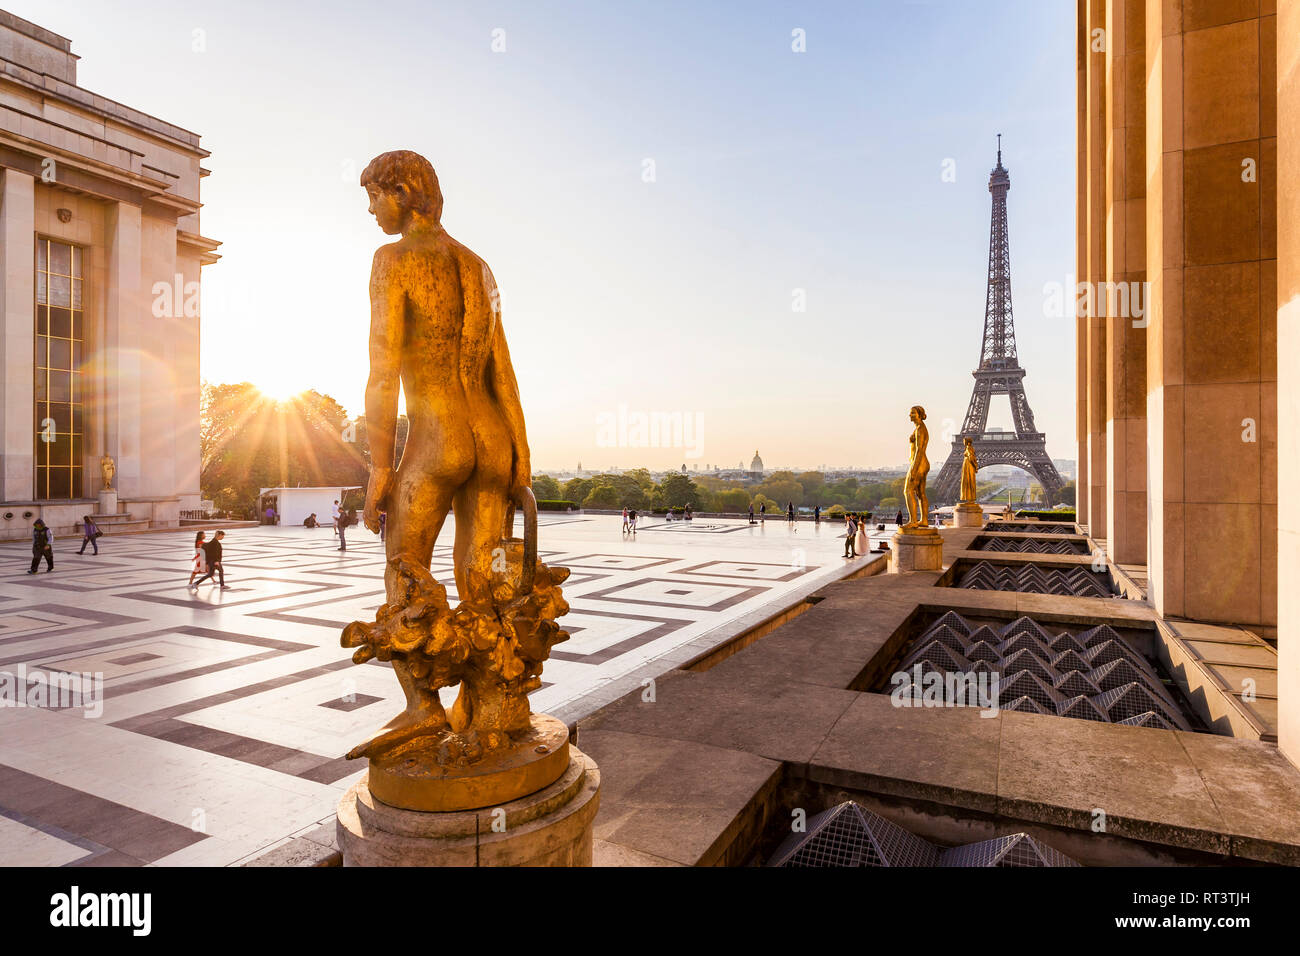 Frankreich, Paris, Eiffelturm mit Statuen am Place du Trocadero Stockfoto